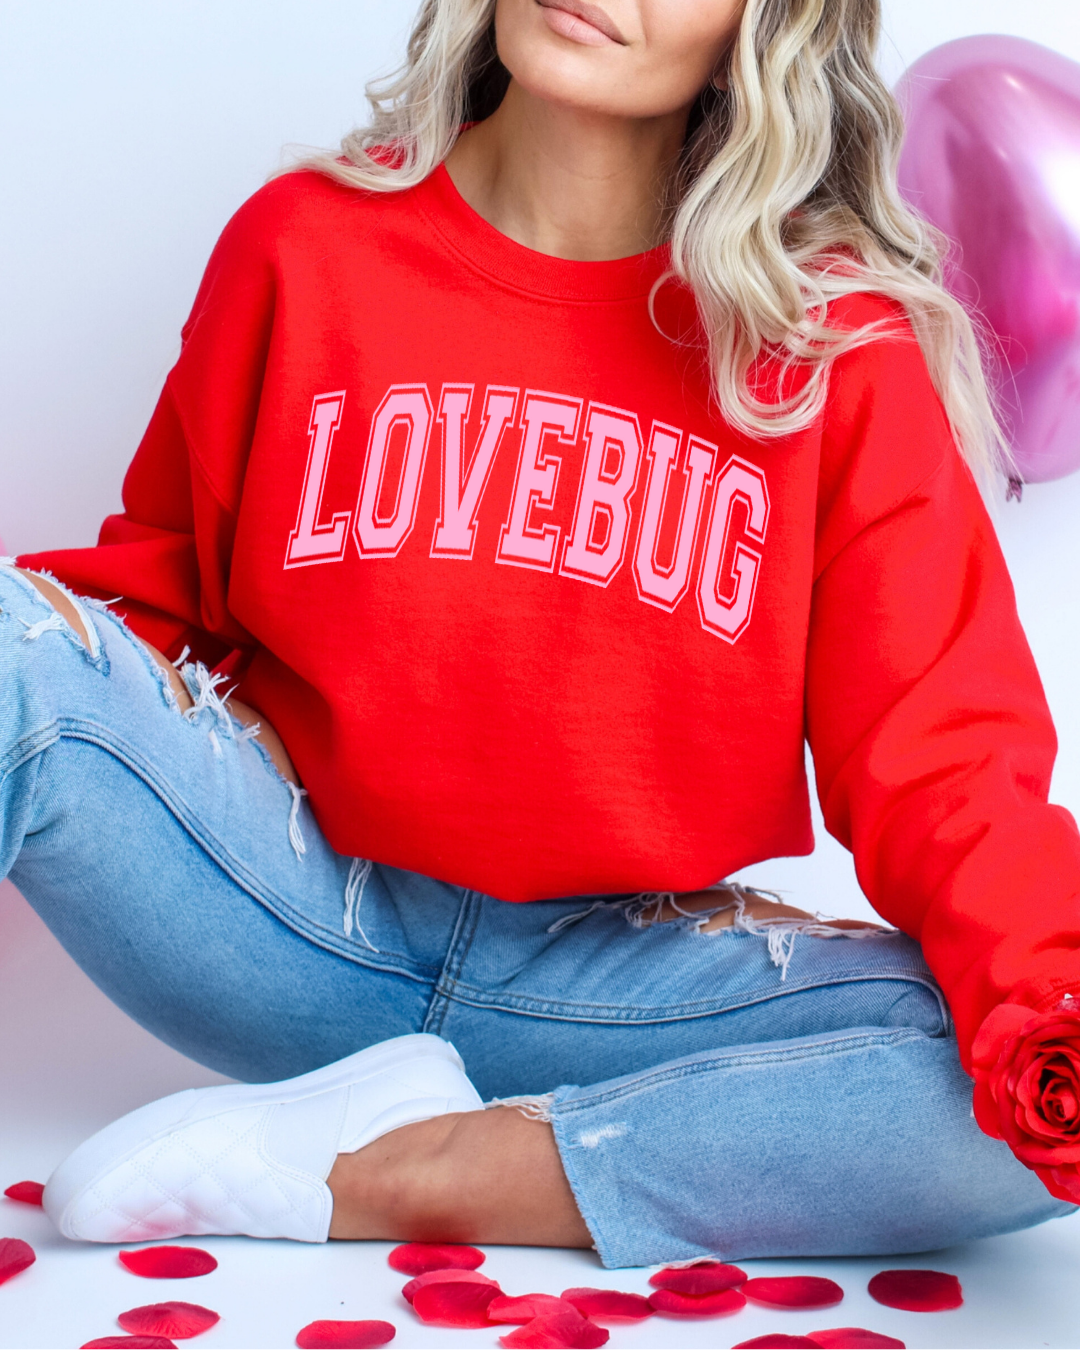 Lovebug Sweatshirt